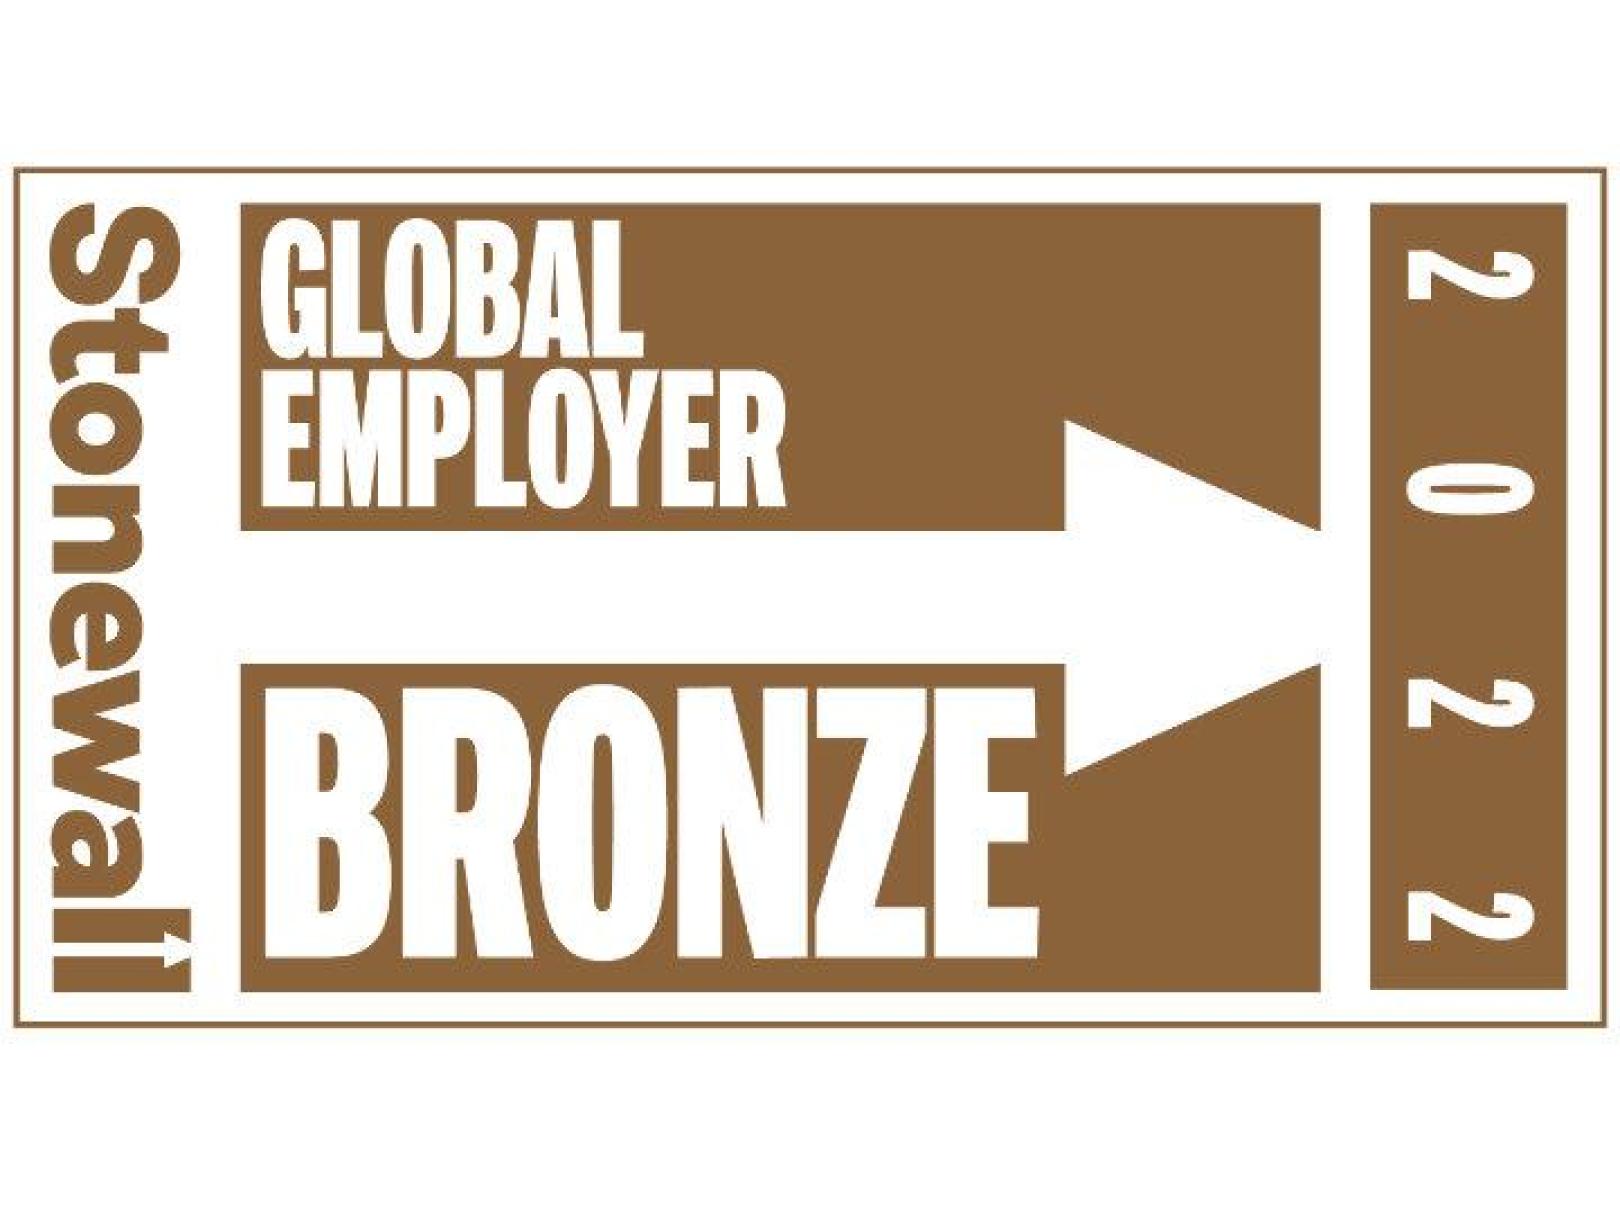 Stonewall Global Employer Award Bronze